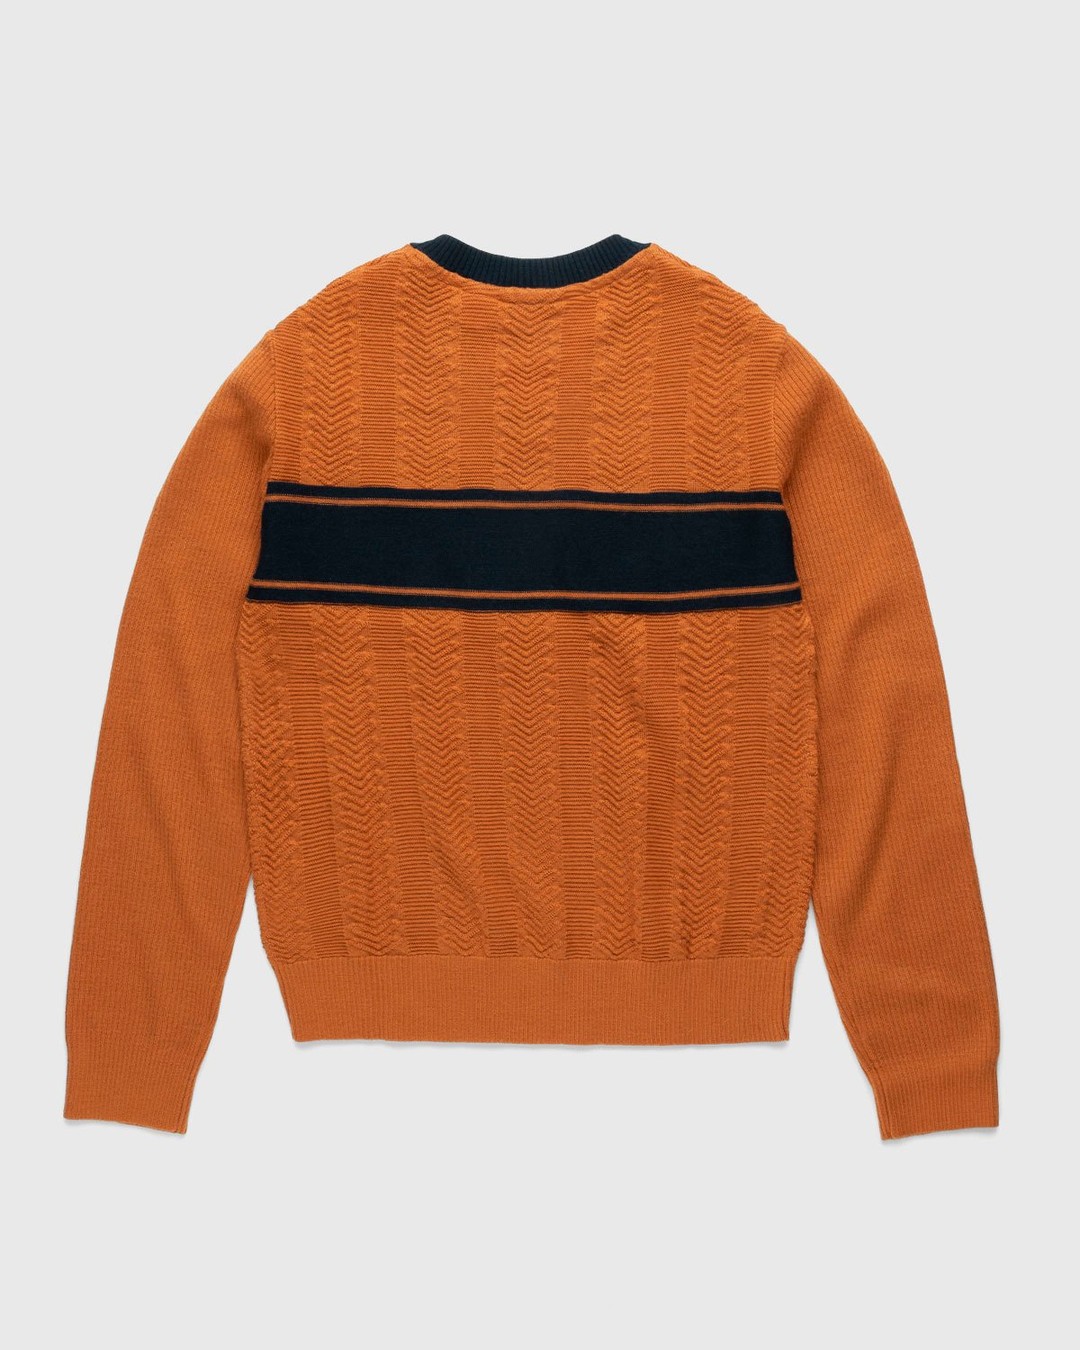 Adidas x Wales Bonner – Knit Longsleeve - V-Necks Knitwear - Orange - Image 2